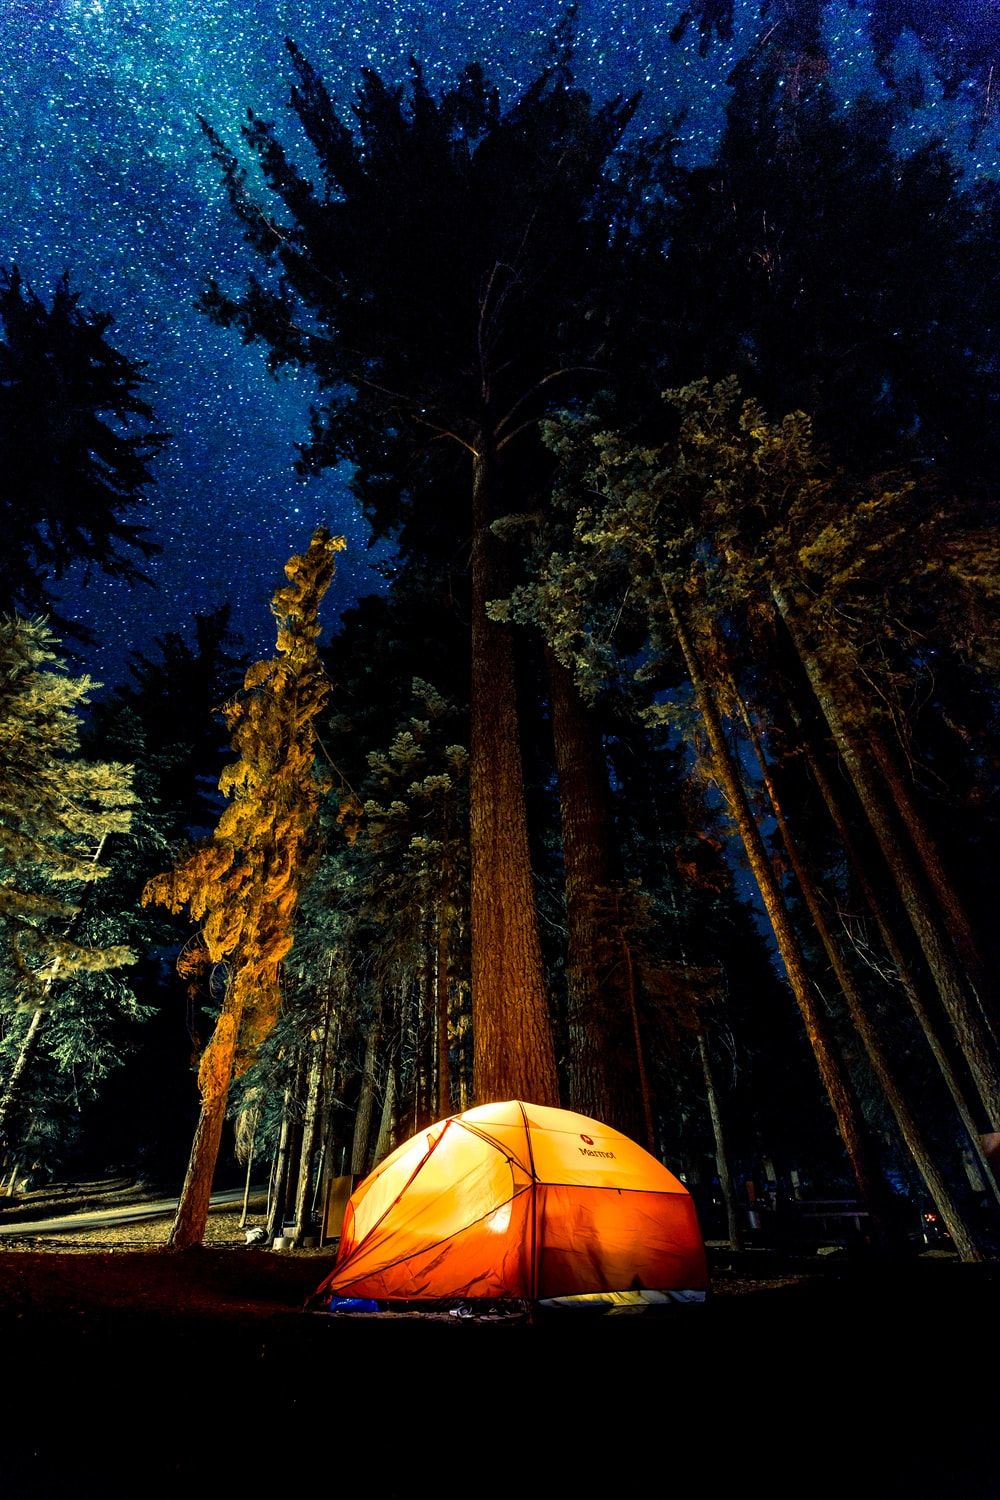 Camping Image [HD]. Download .com